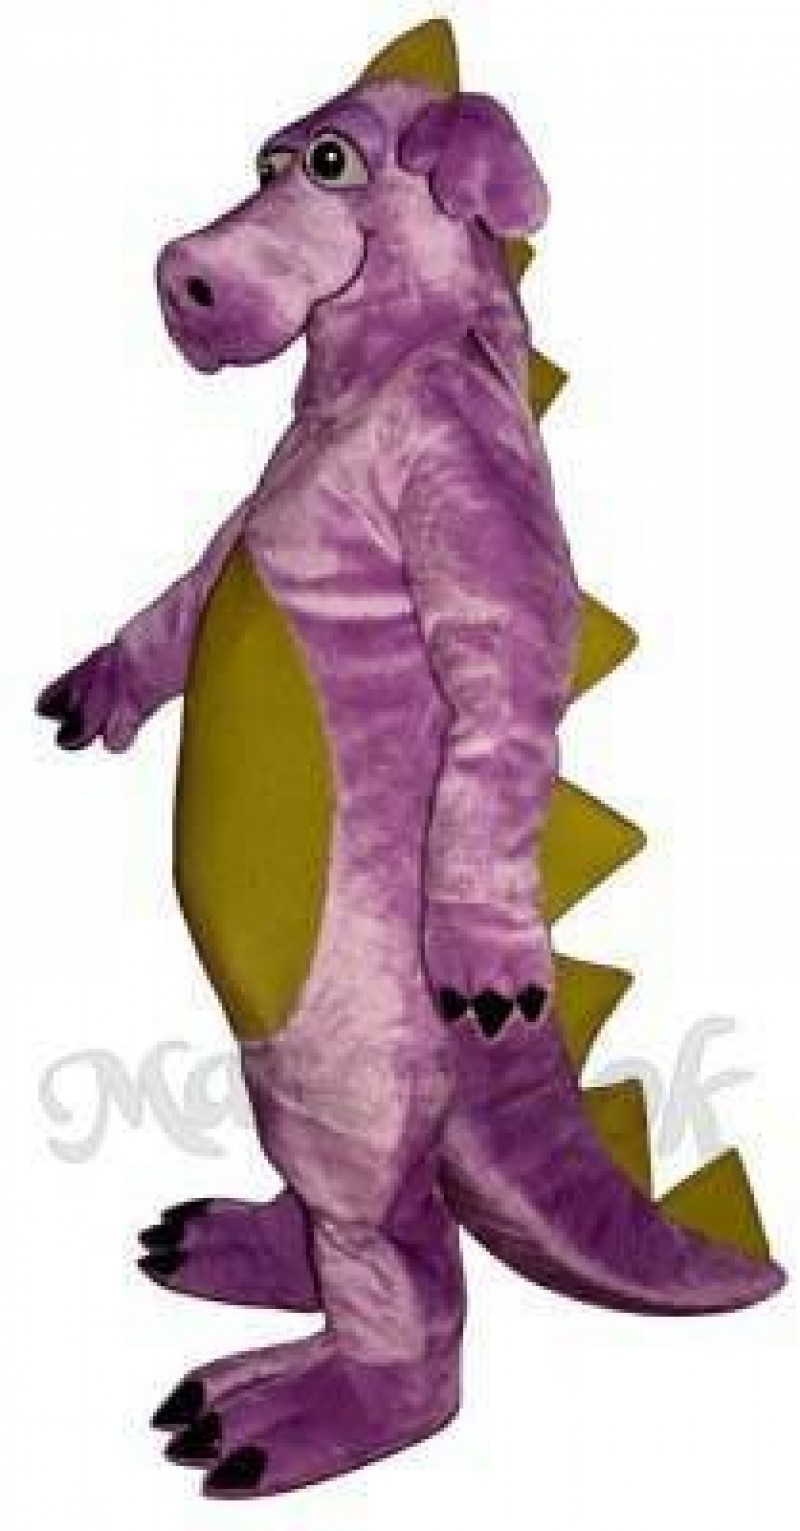 Purple Whimsical Dragon Mascot Costume